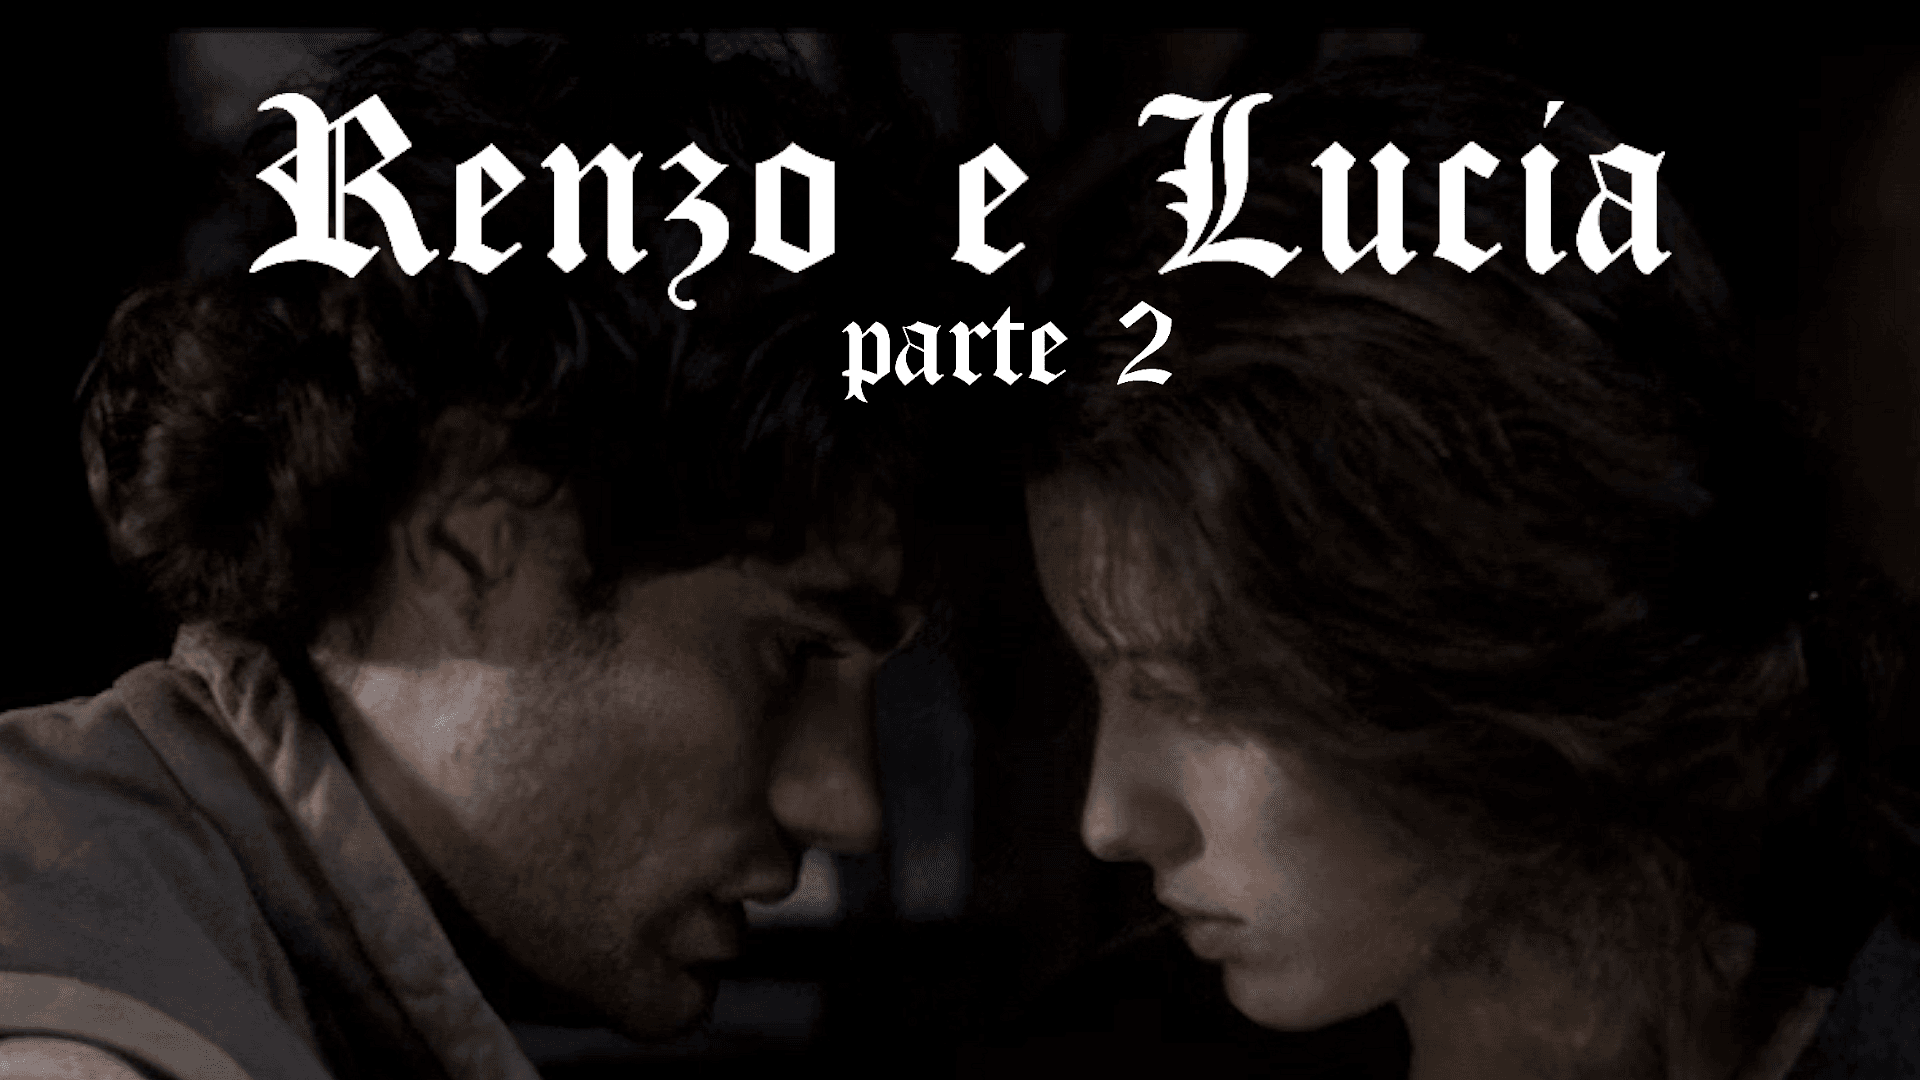 Renzo & Lucia - Part 2